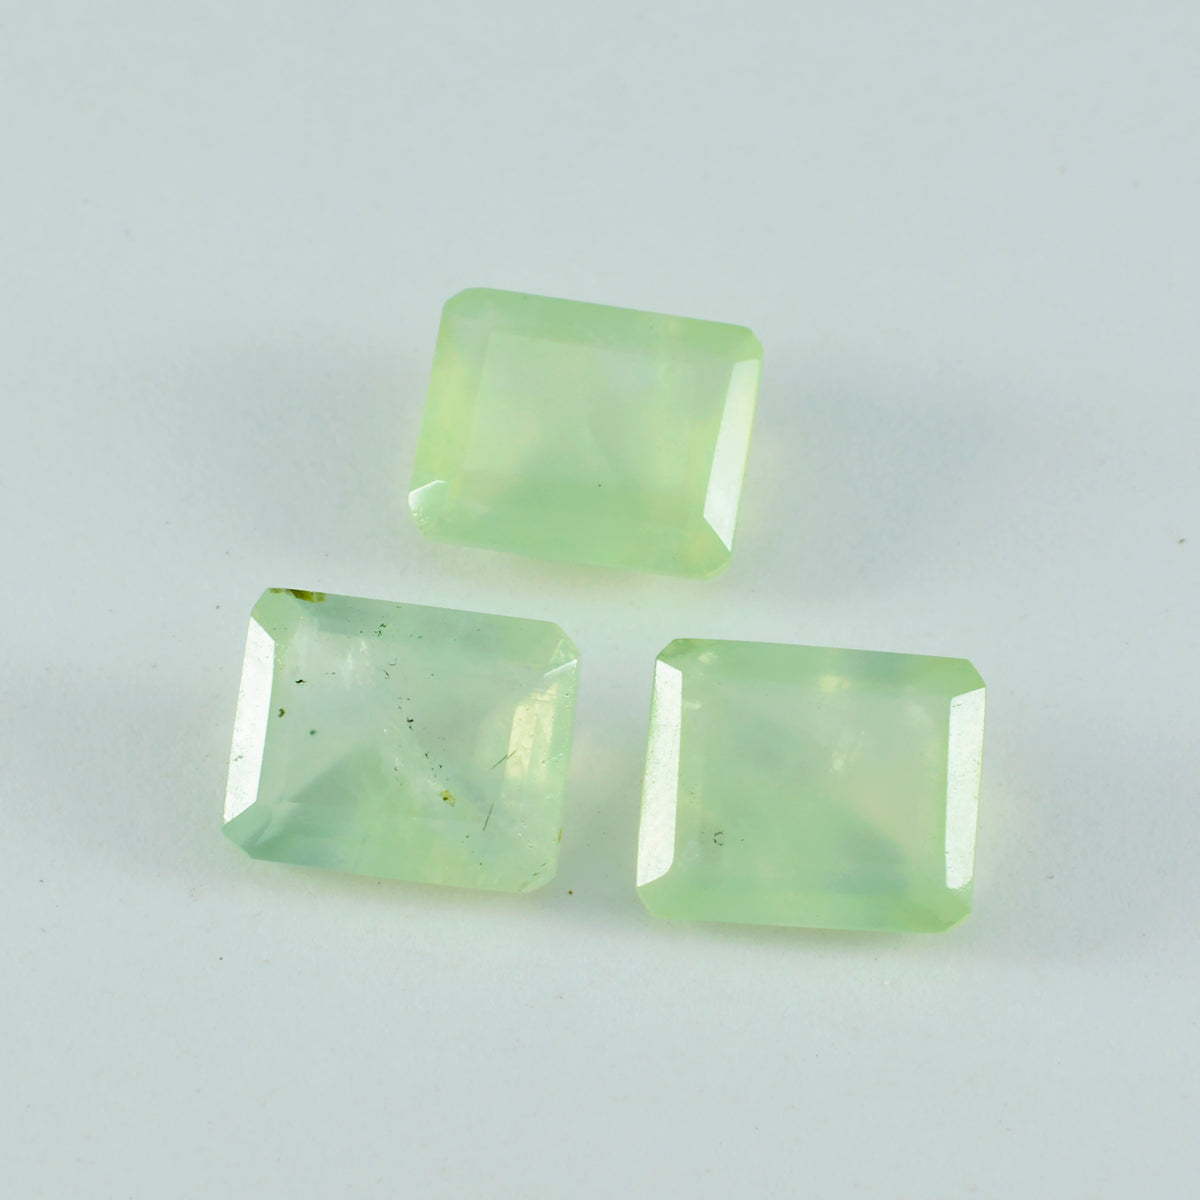 riyogems 1 st grön prehnit fasetterad 12x16 mm oktagonform söt kvalitet lös pärla